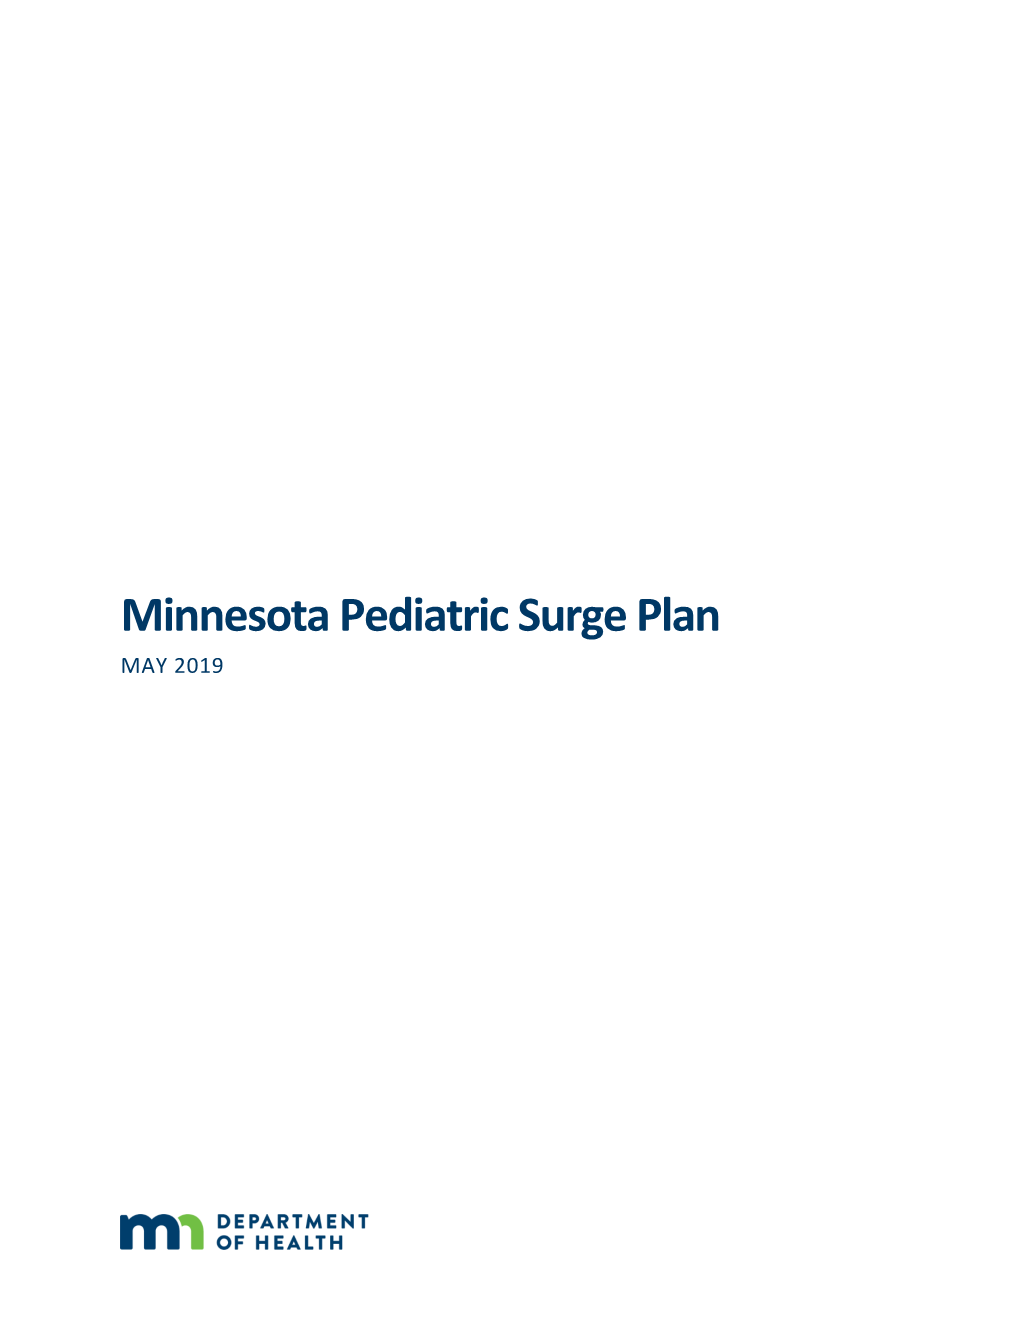 Pediatric Surge Plan MAY 2019